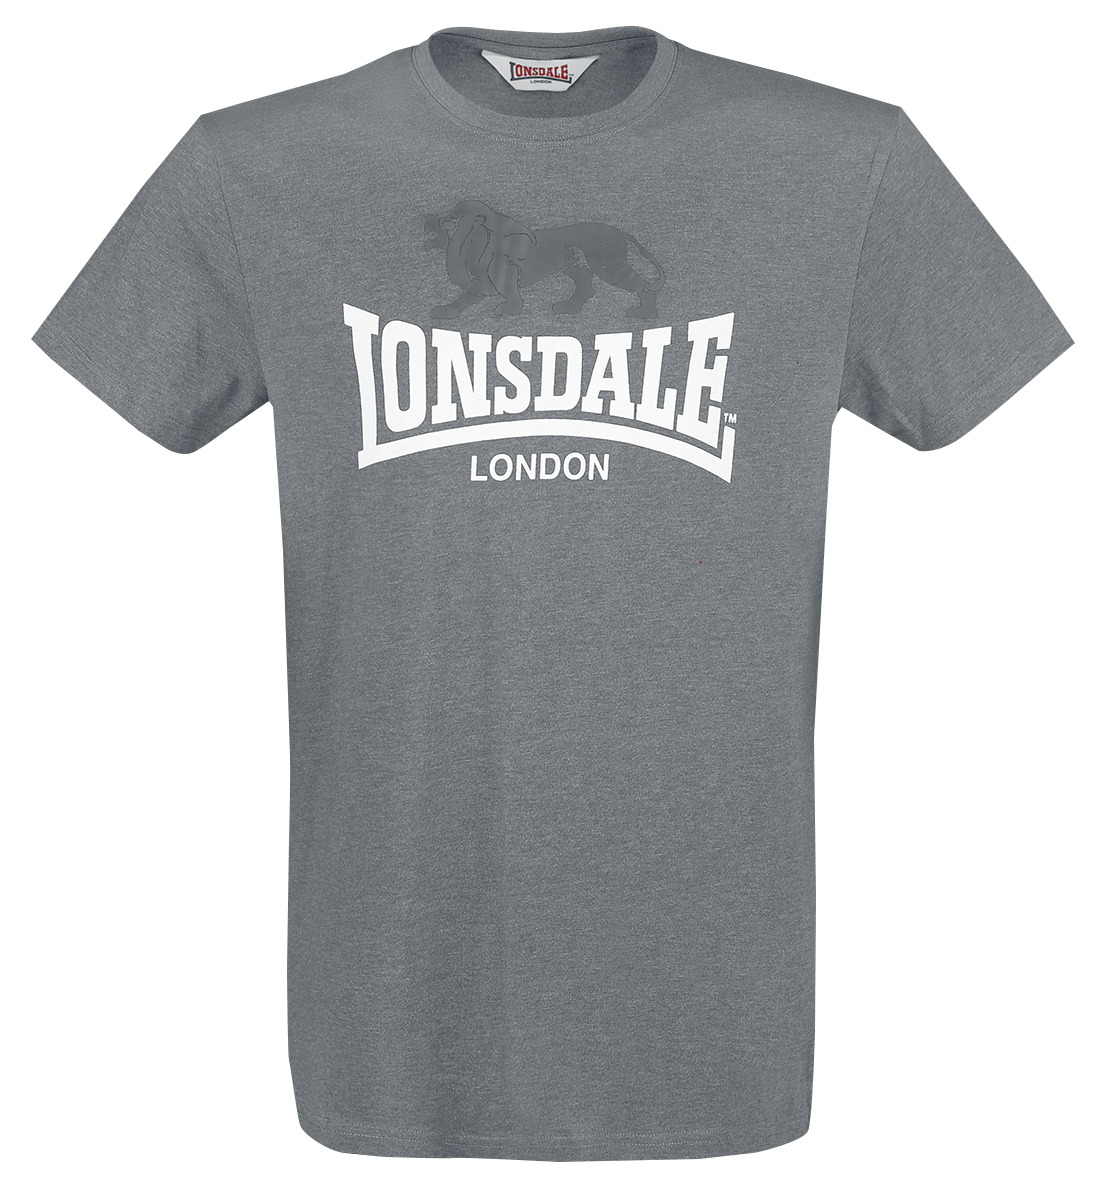 Lonsdale London - Gargrave - T-Shirt - anthrazit